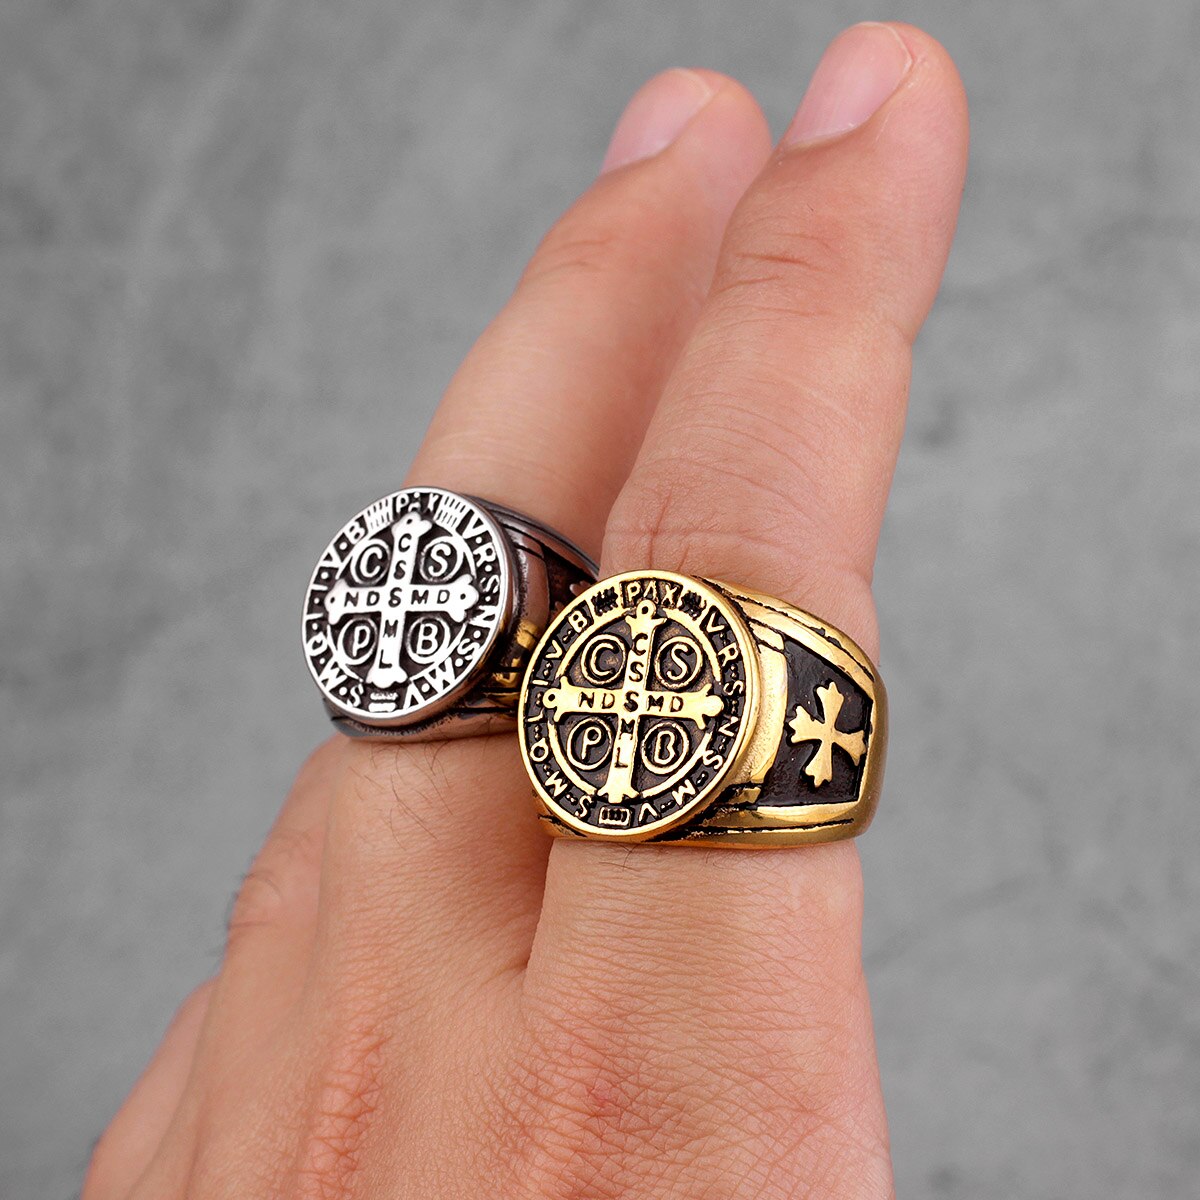 Exorcism Saint Benedict Cspb Cross Men Rings Punk Hip Hop for Boyfriend Male Stainless Steel Jewelry Creativity Gift